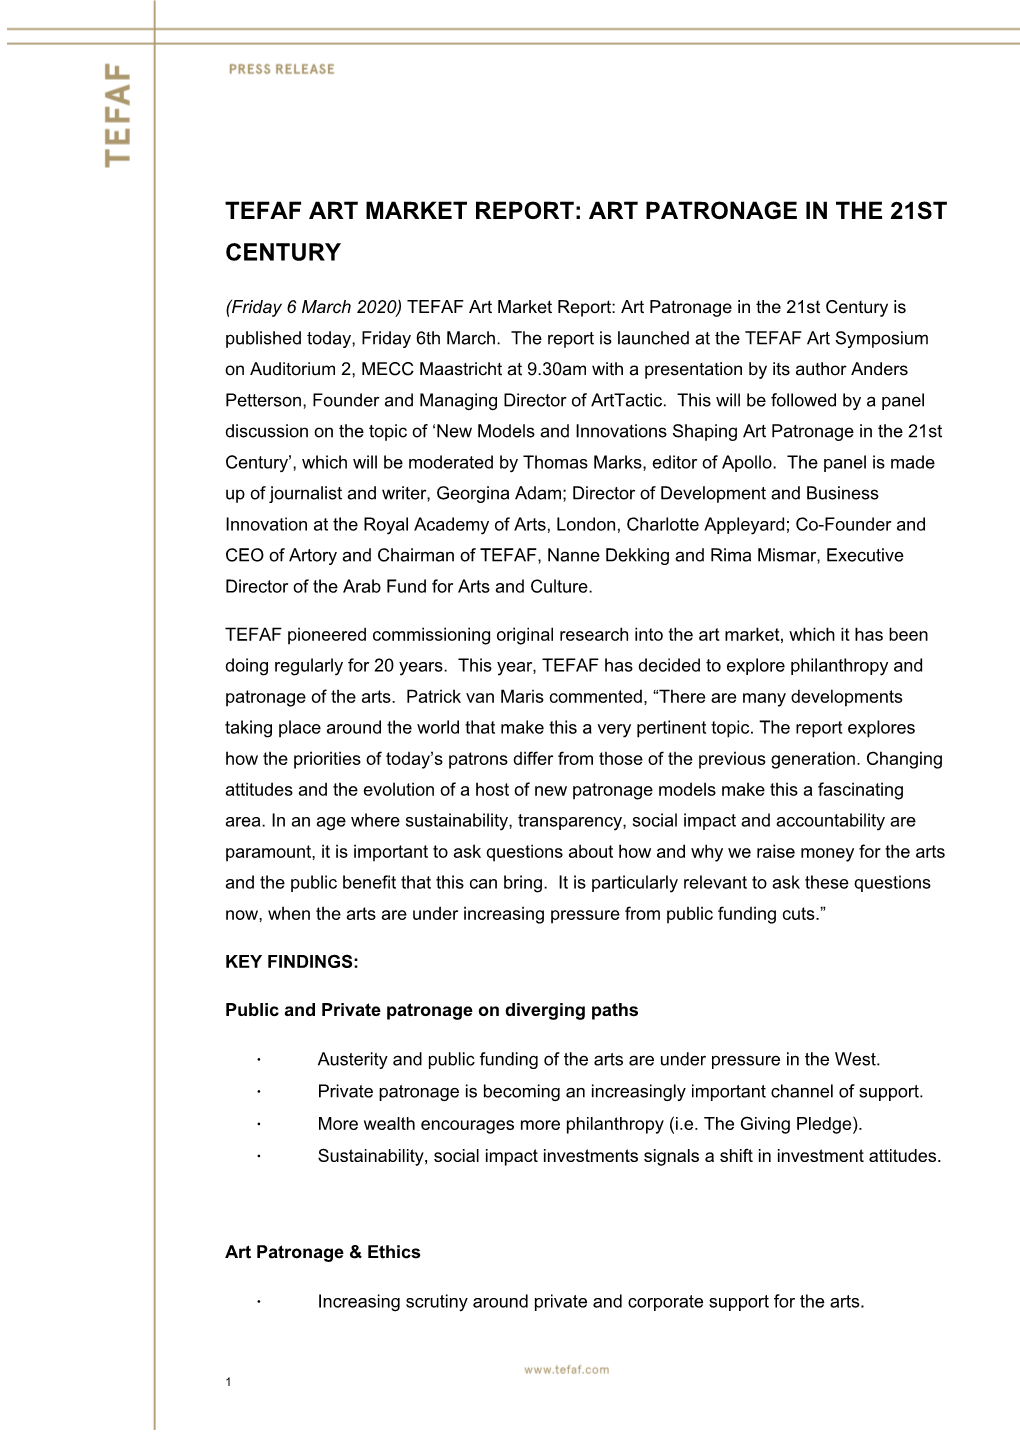 Tefaf Art Market Report: Art Patronage in the 21St Century